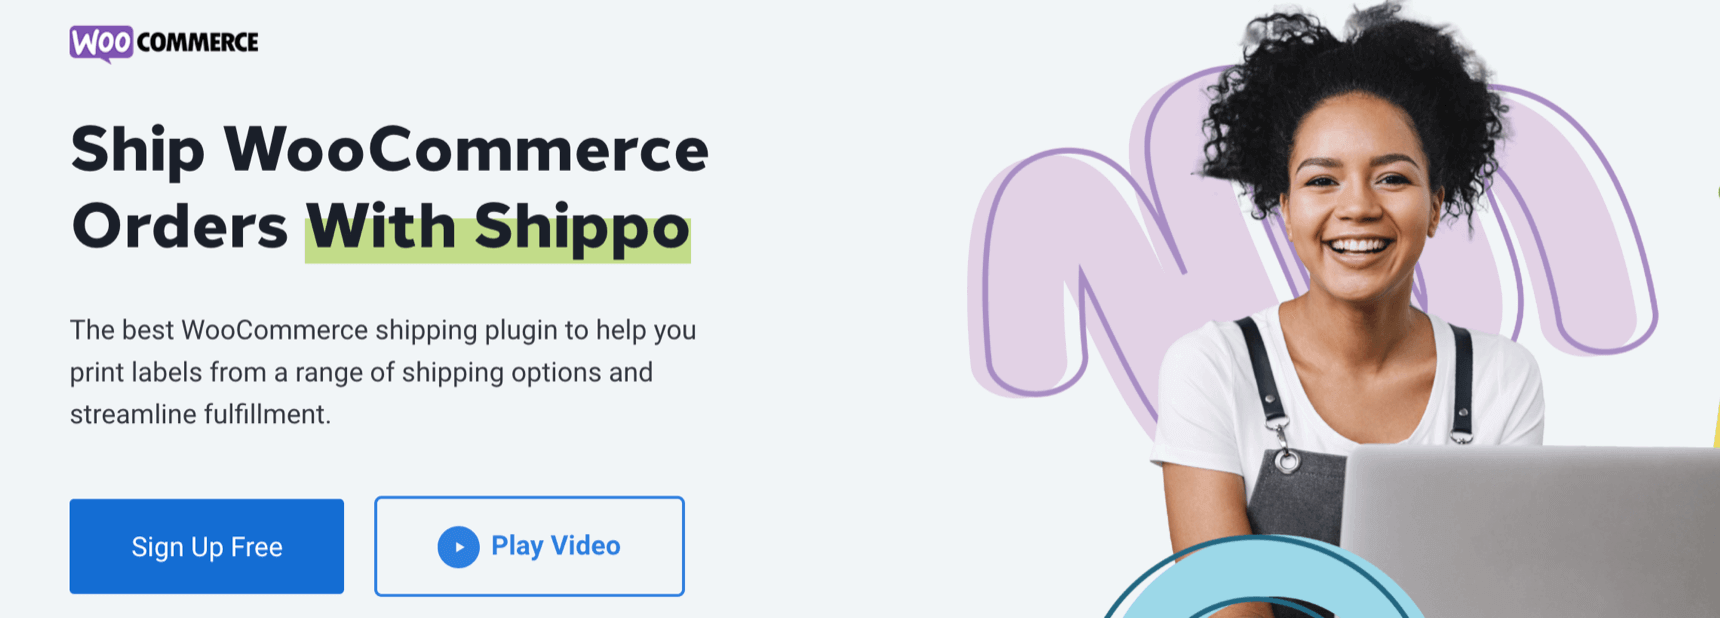 Shippo - WooCommerce shipping plugin